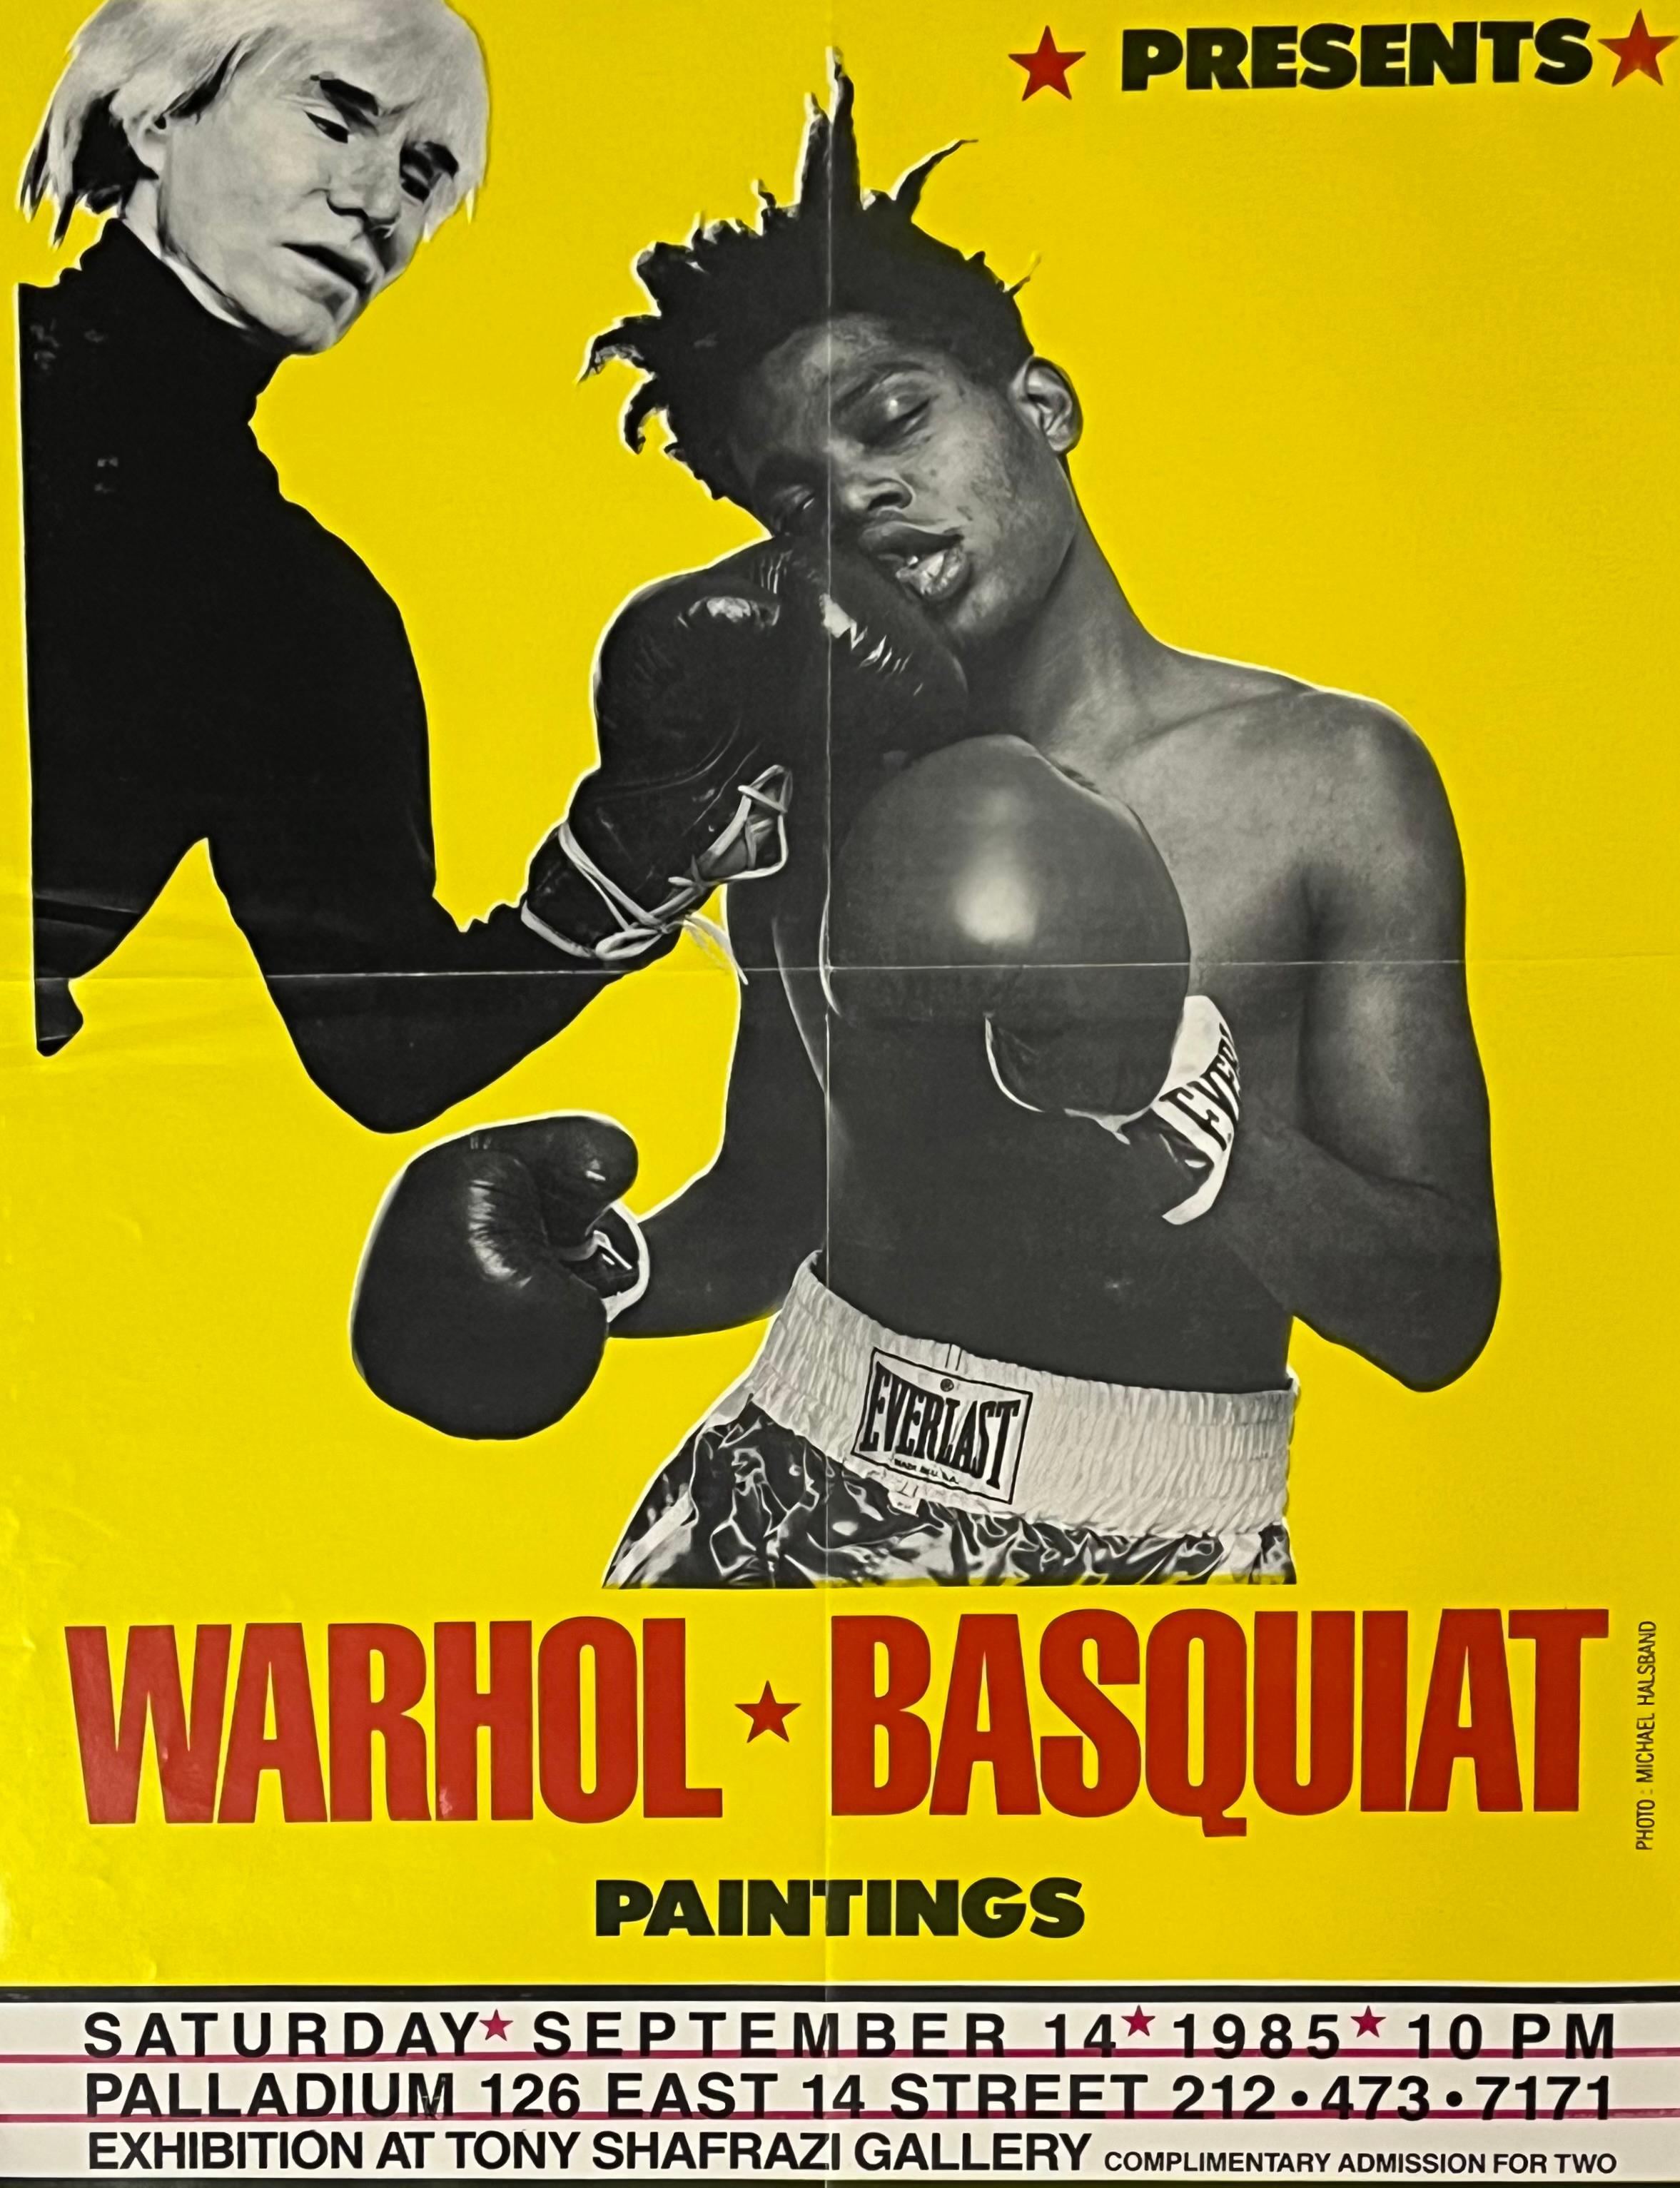 Warhol Basquiat Boxing Poster (Basquiat Warhol boxing The Palladium) - Print by Michael Halsband